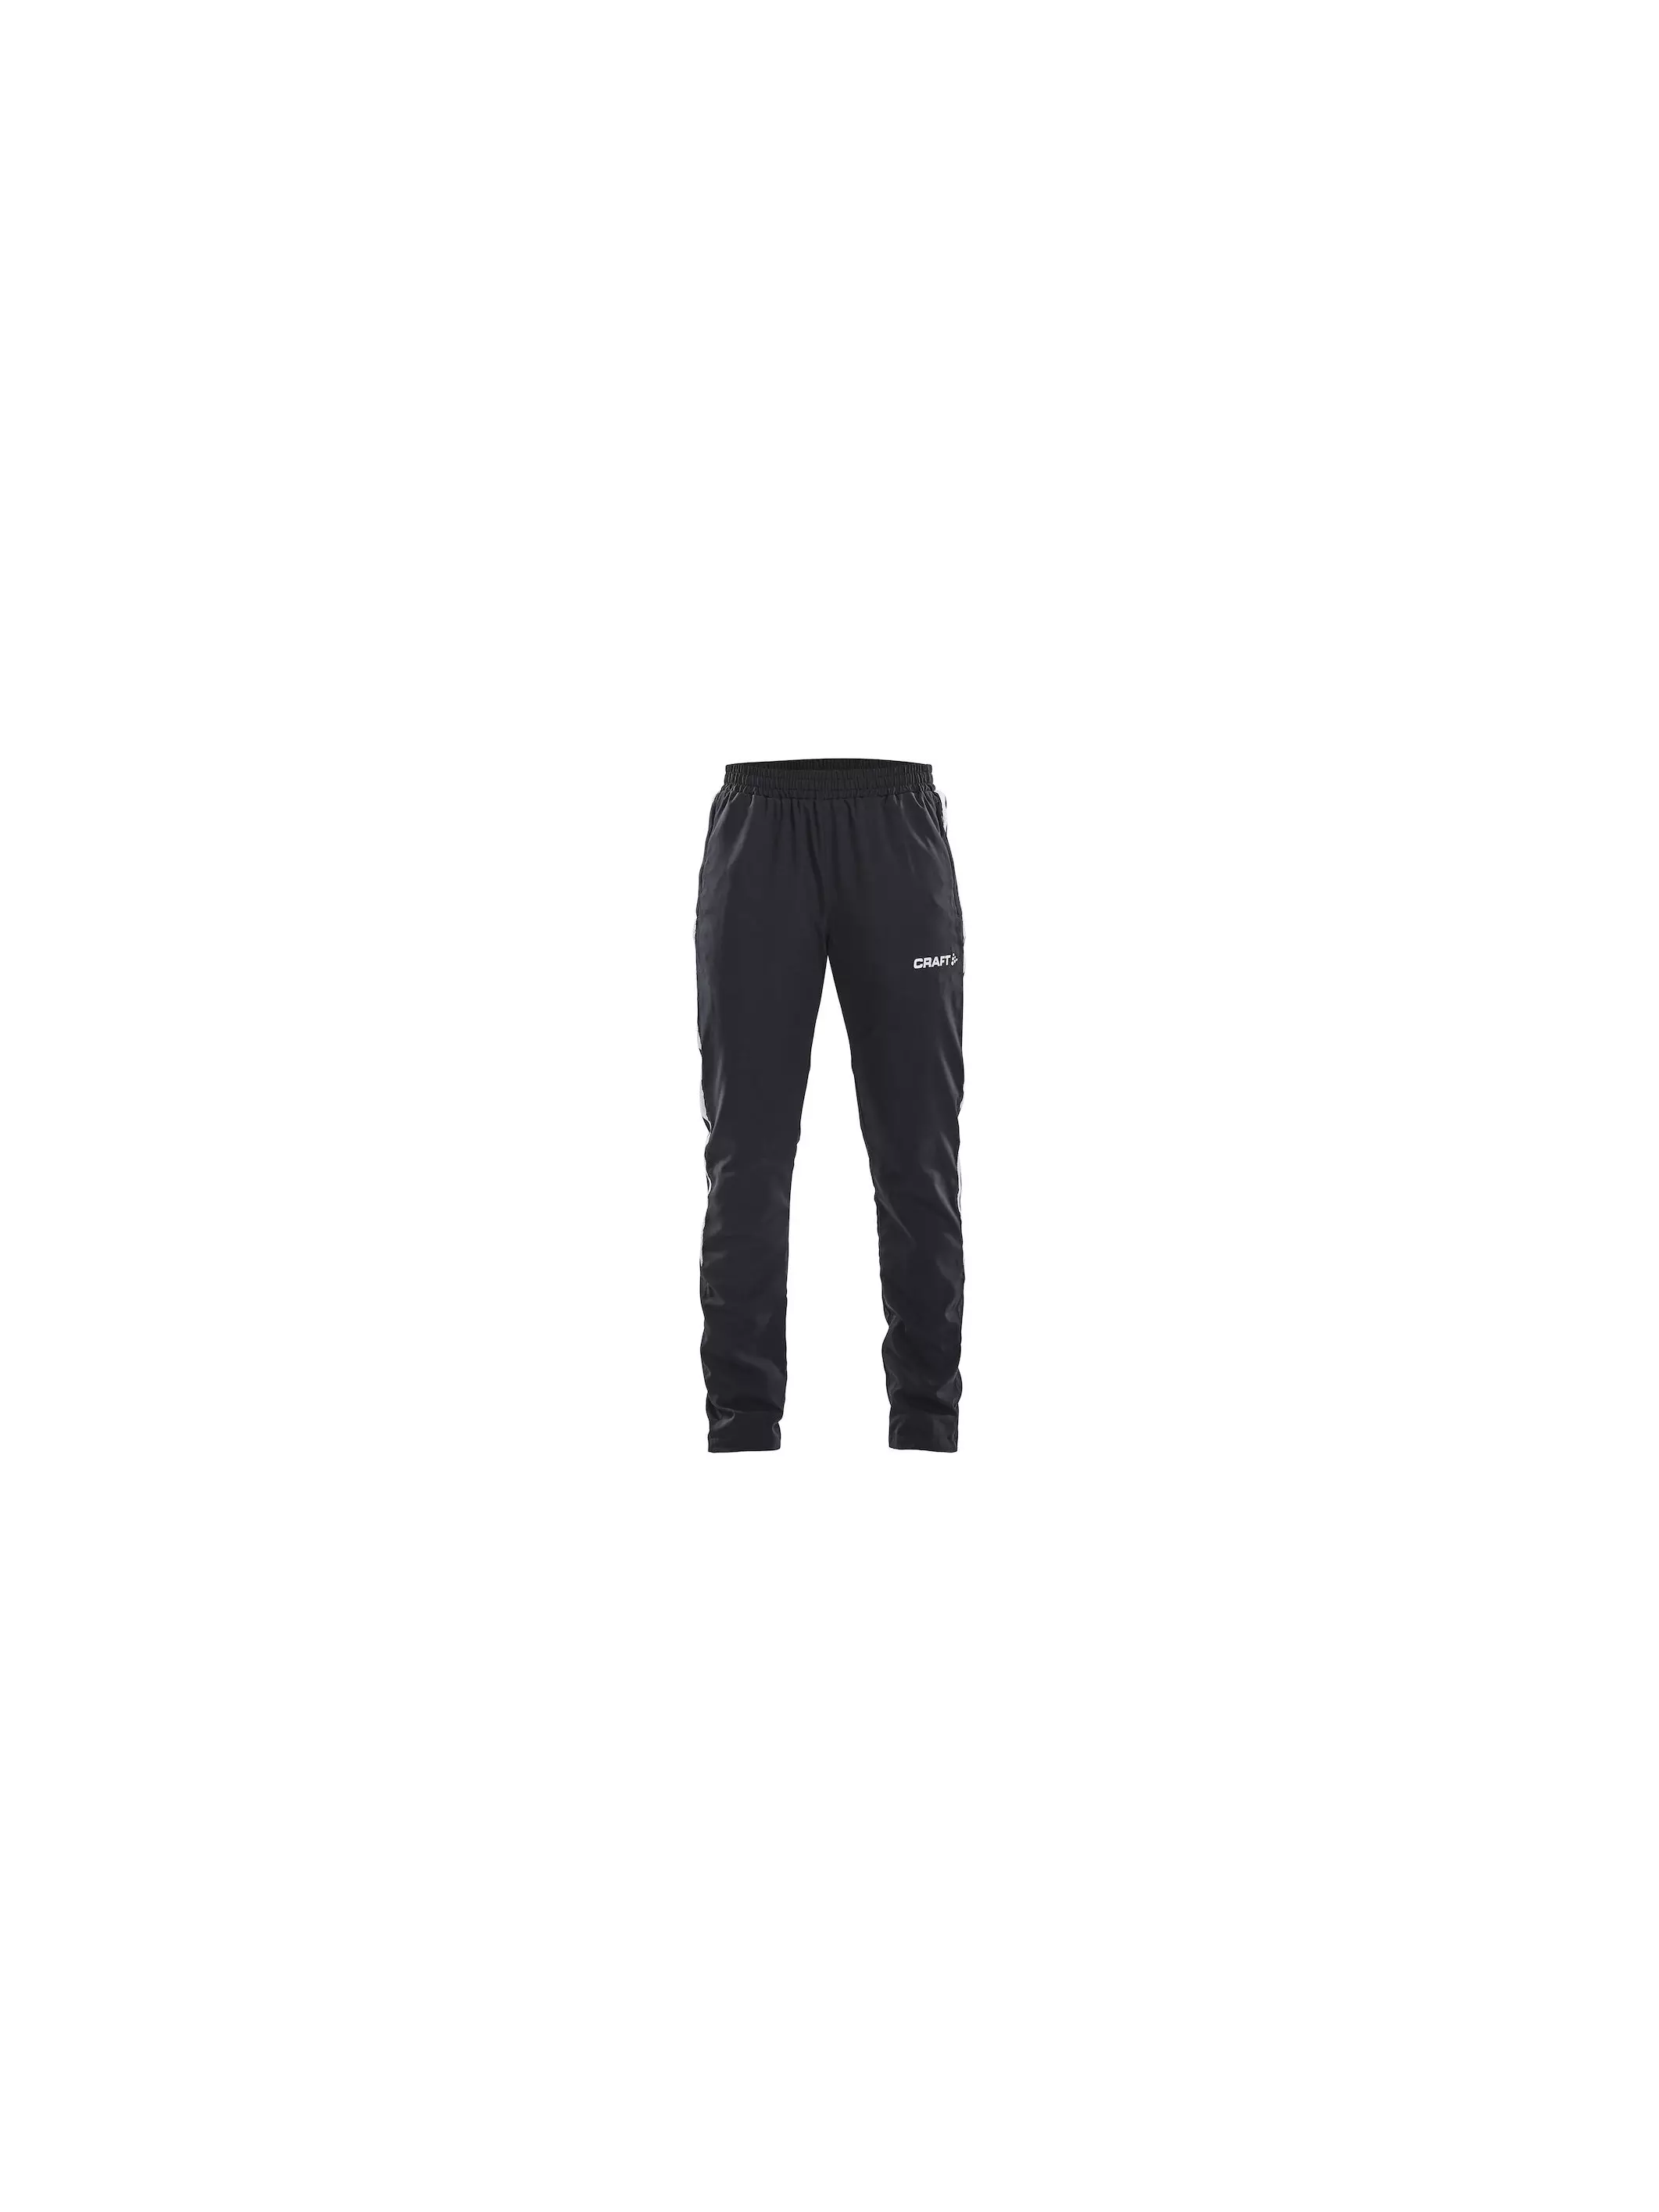 Pantalons & Collants Craft PRO CONTROL WOVEN PANTS W - 1906711